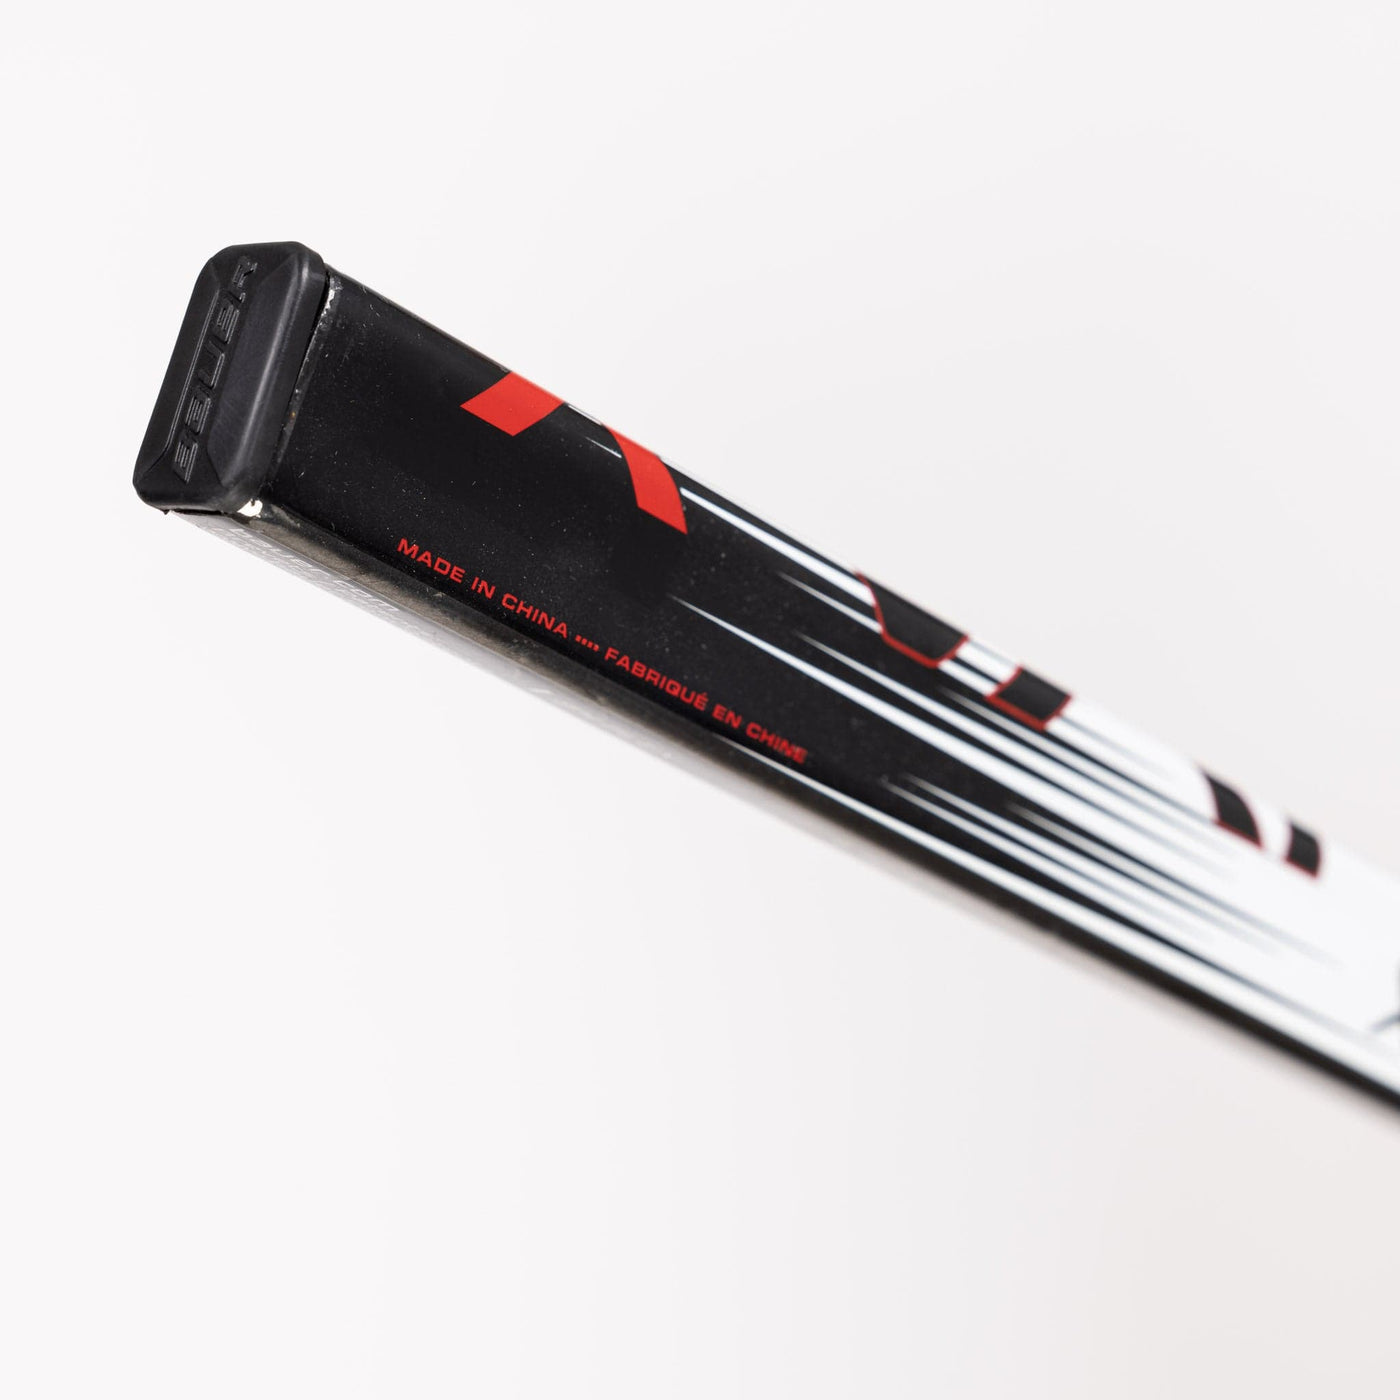 Bauer Vapor X3 Senior Hockey Stick - The Hockey Shop Source For Sports